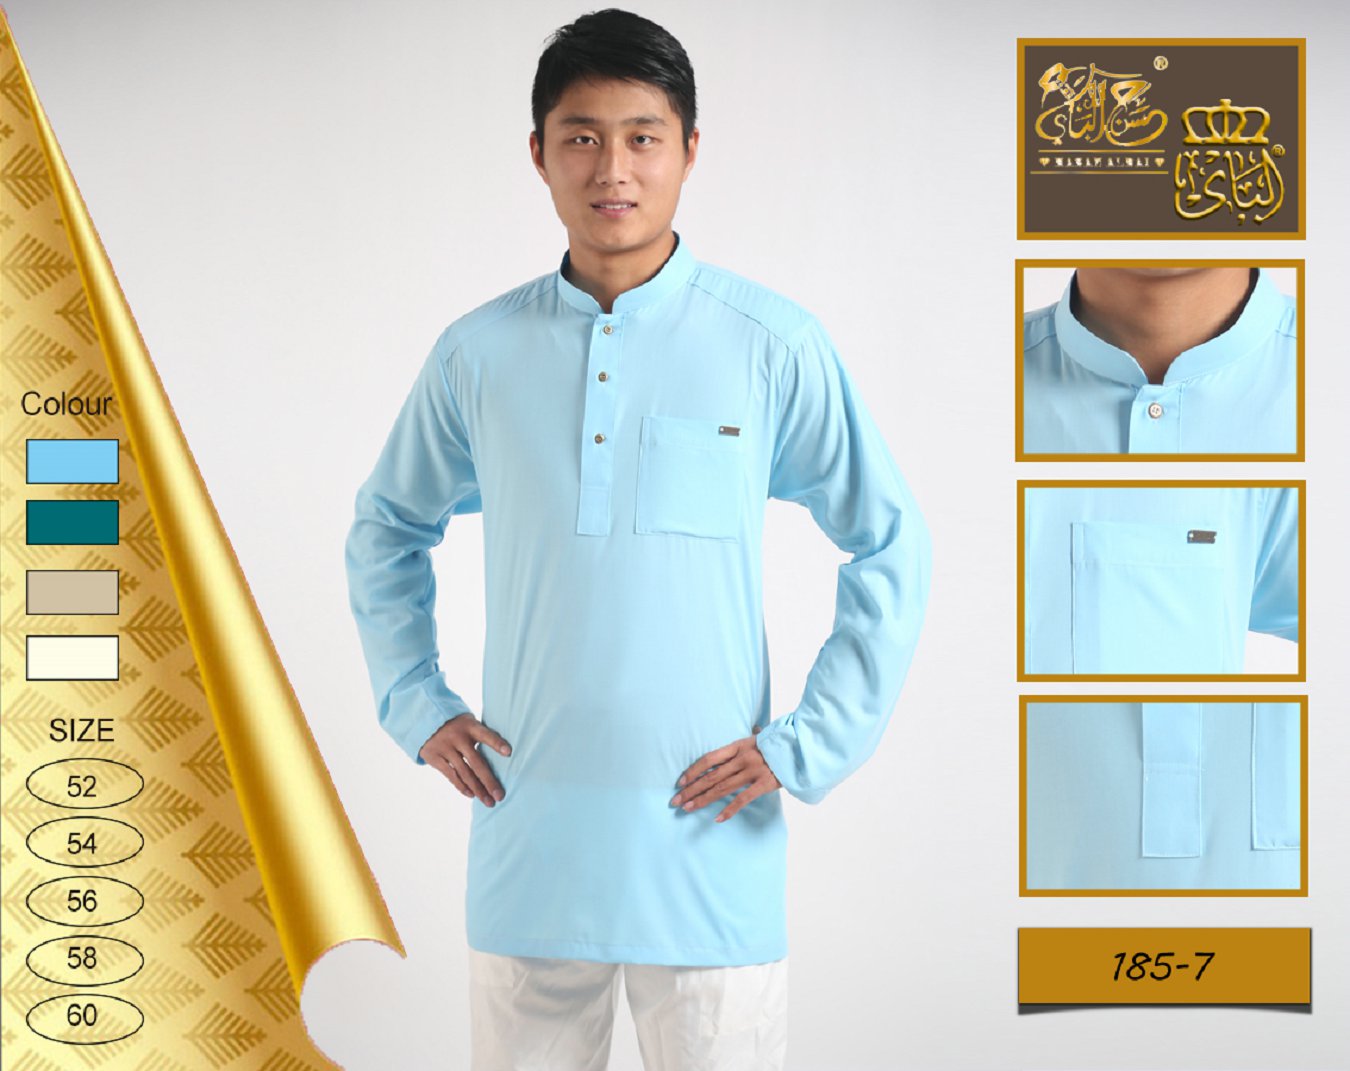 Malay clothing6